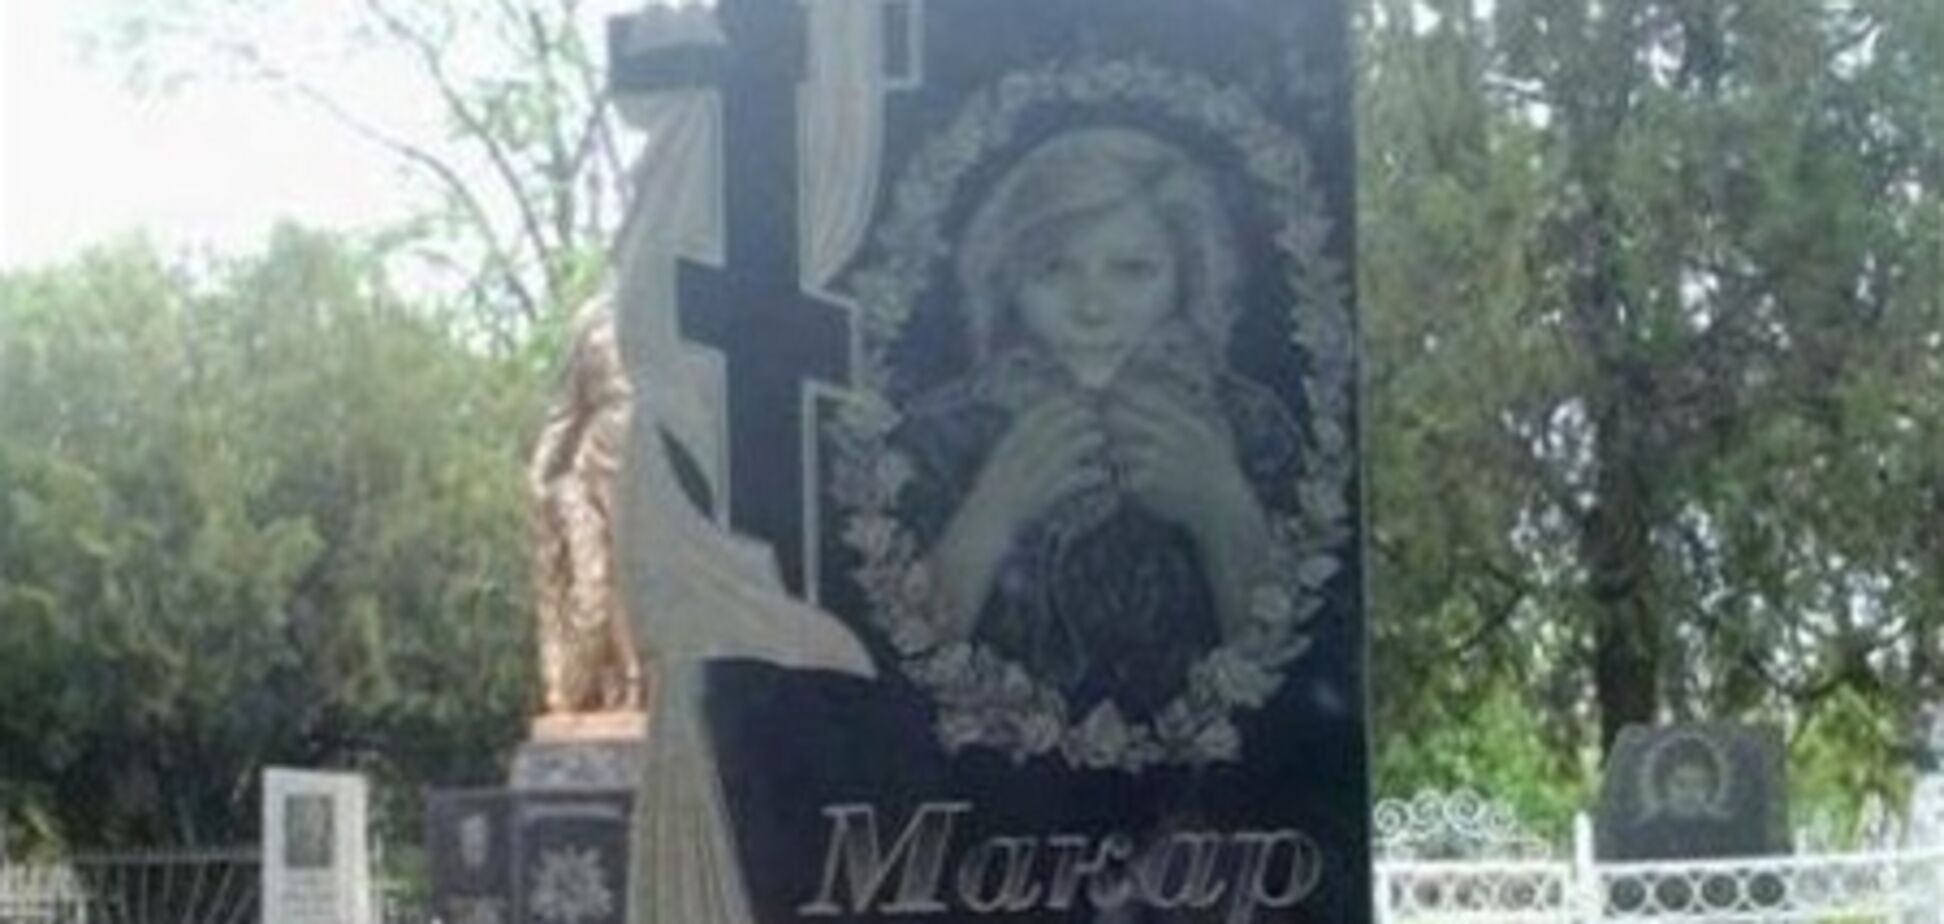 На могиле Оксаны Макар установили памятник с шиншиллами